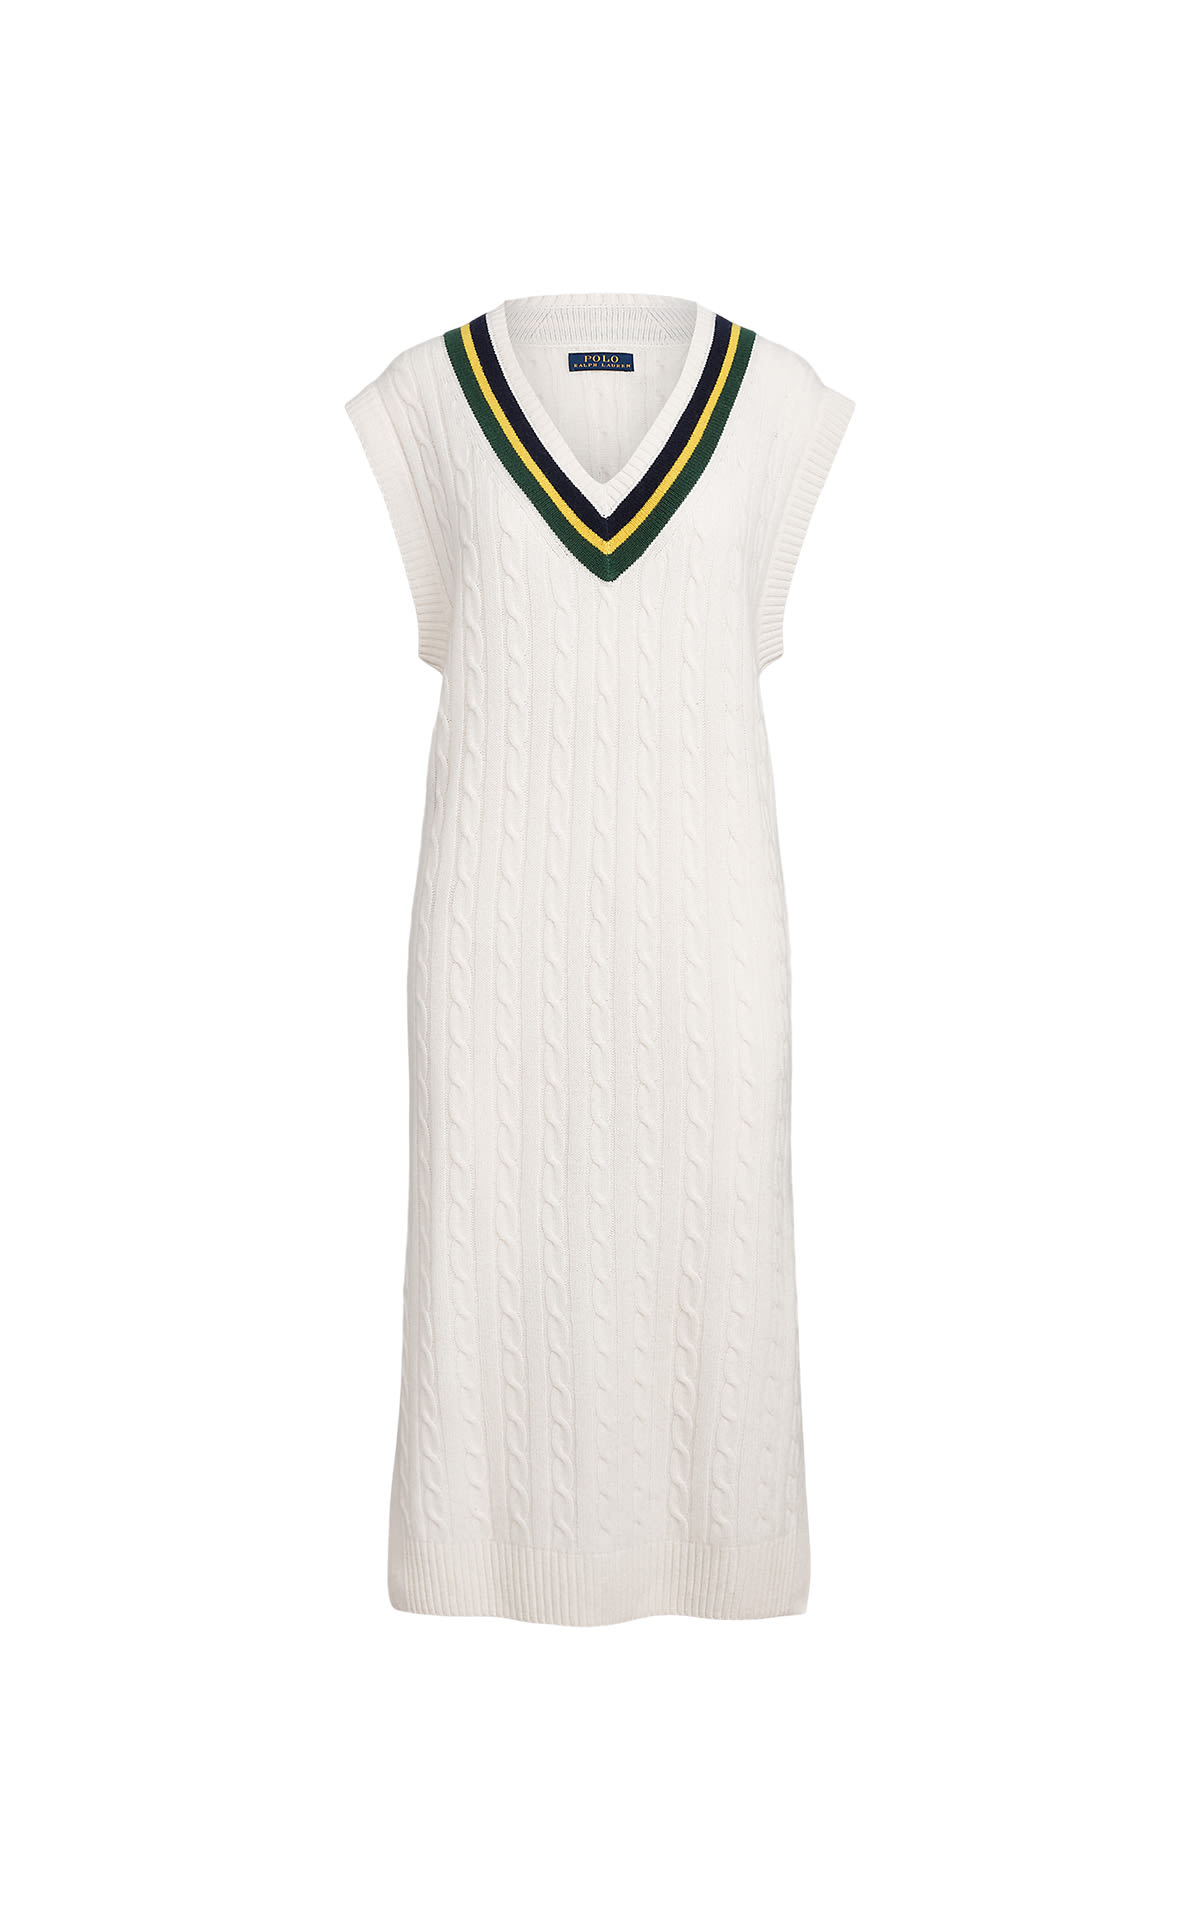 White knit dress Polo Ralph Lauren Women